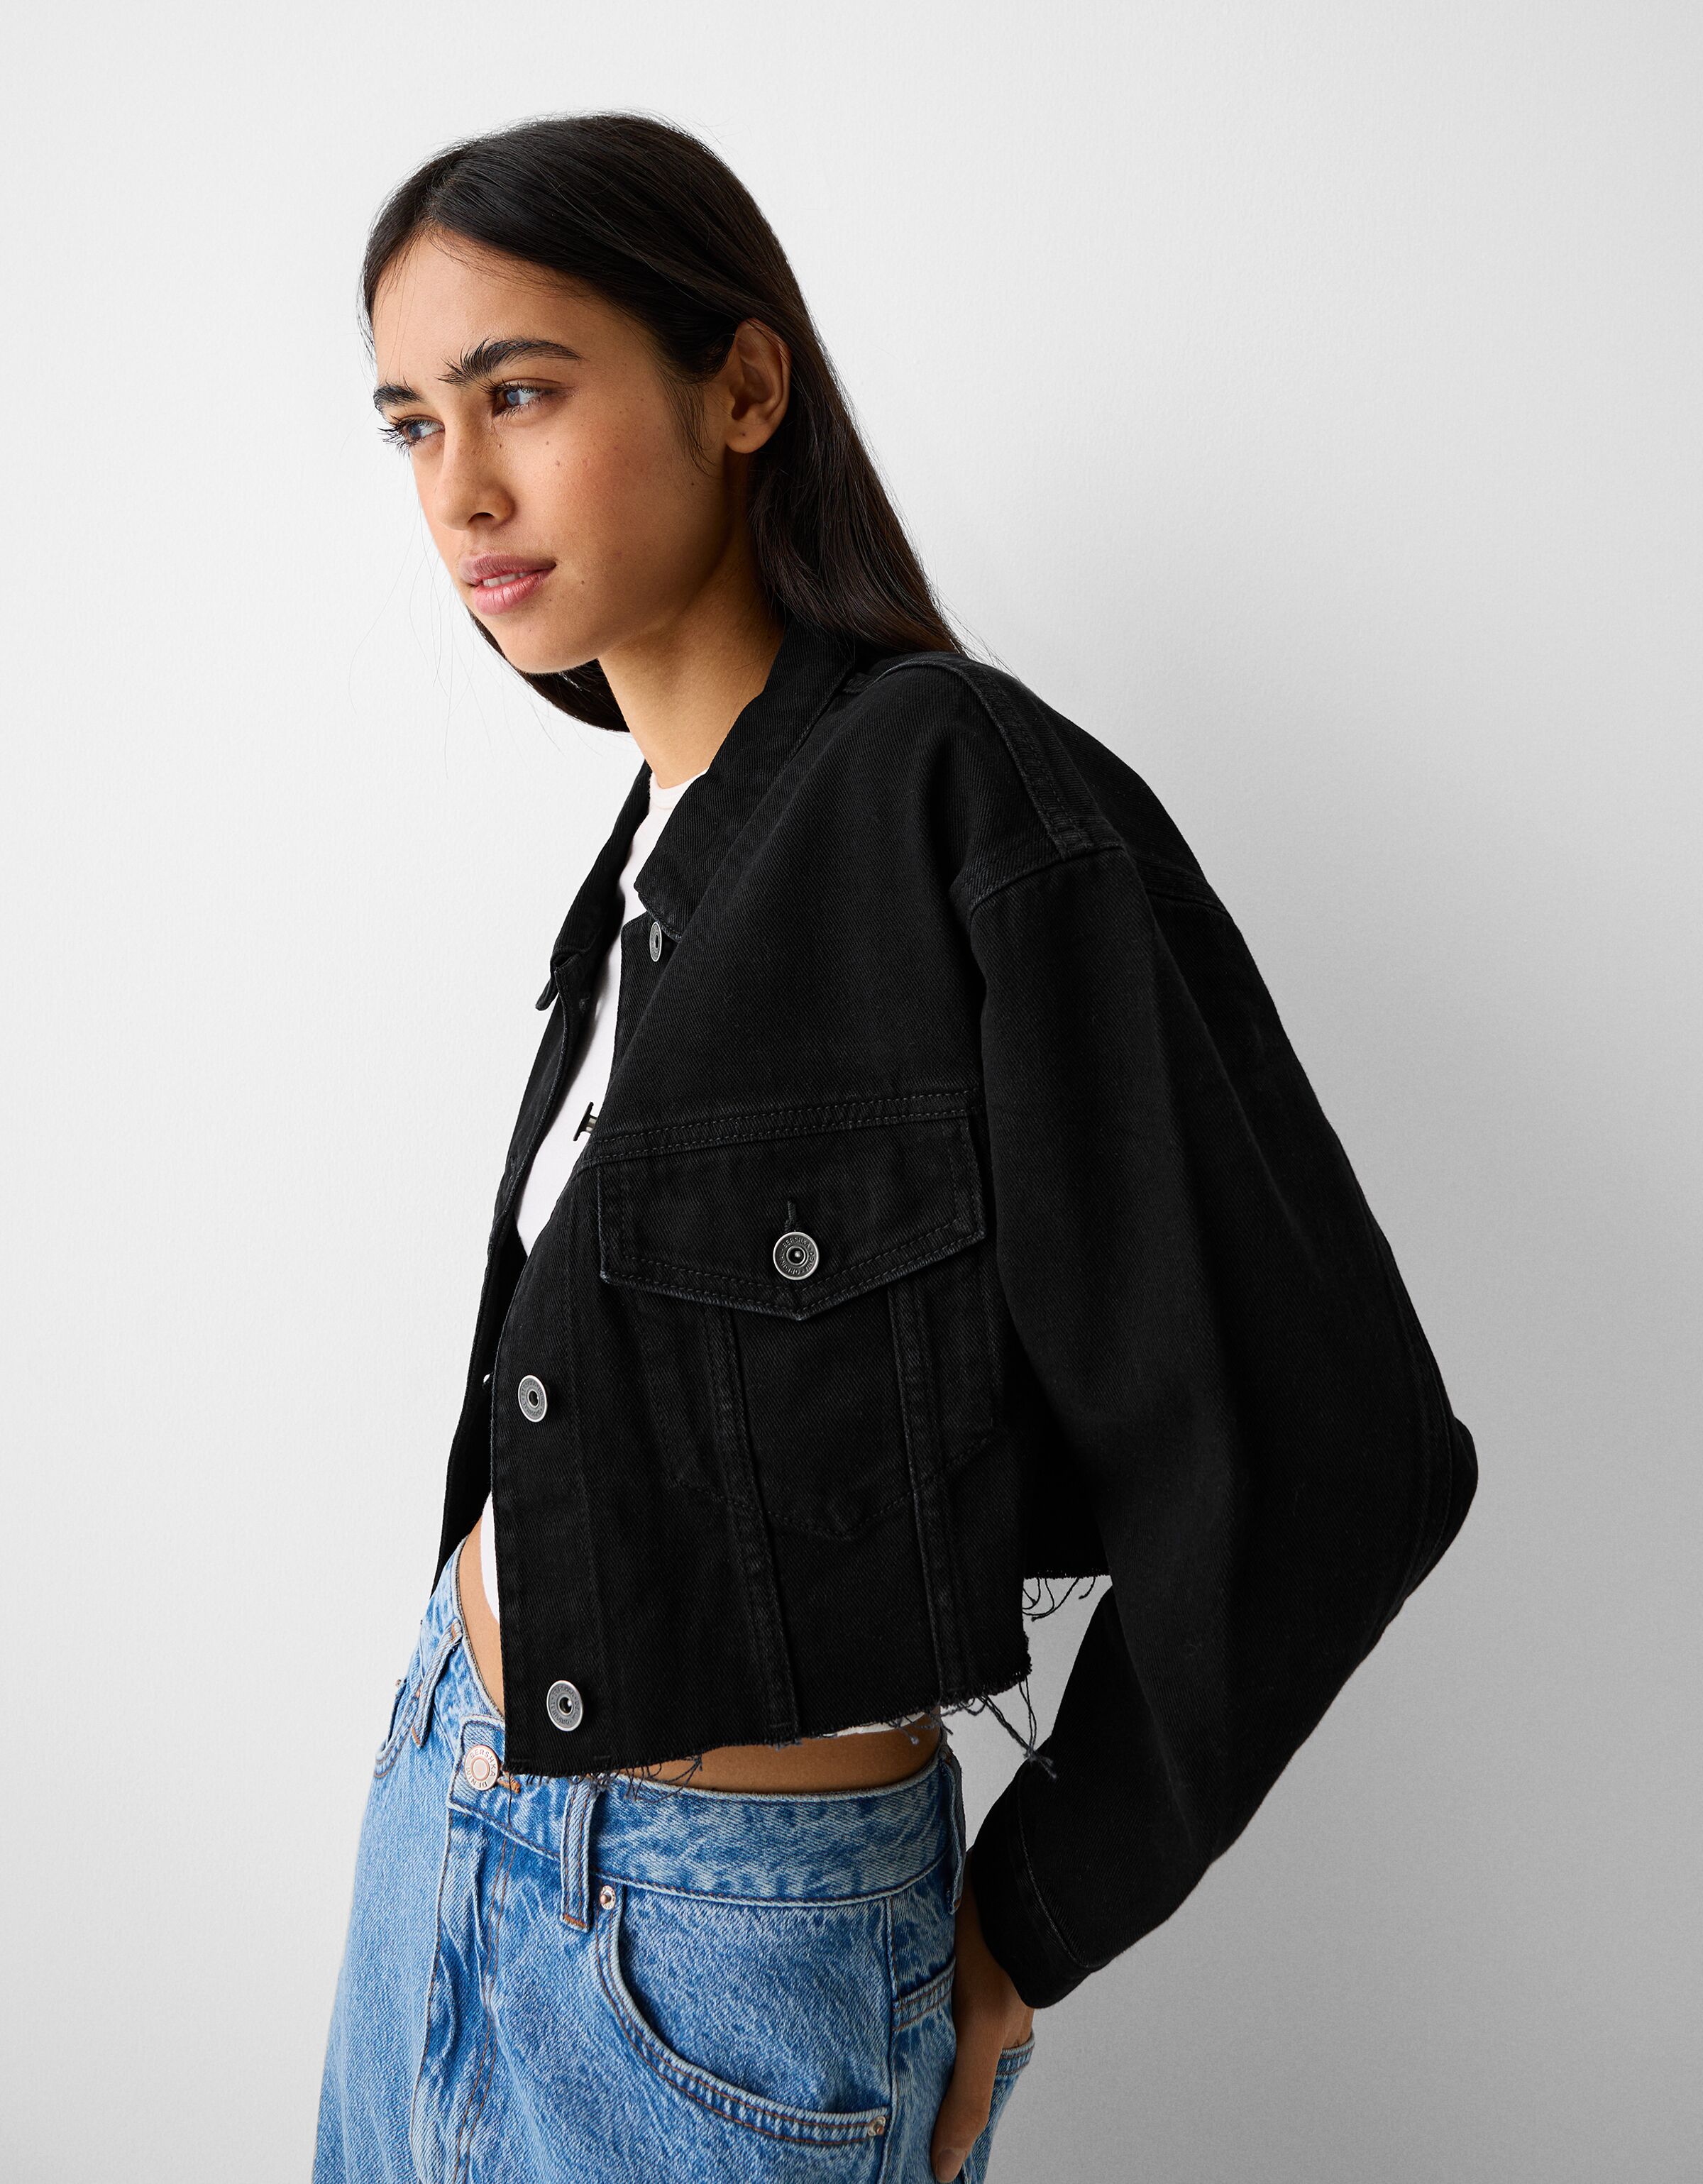 Buy Exclusive Women's Denim Jackets on Sale | ONLY